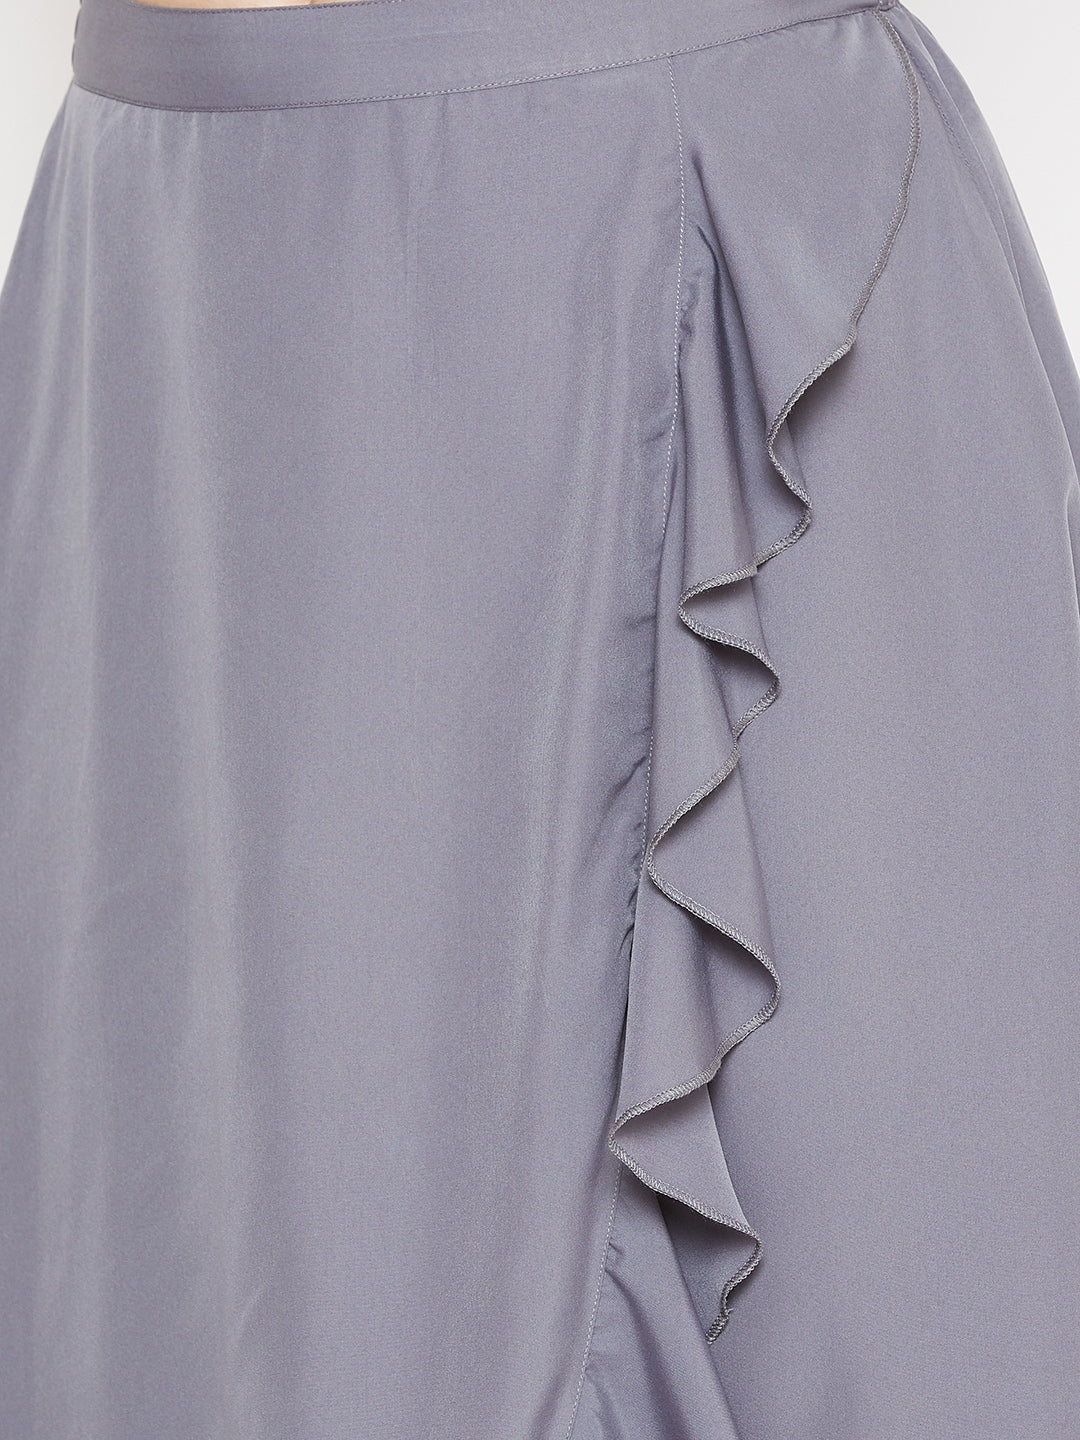 Overlap Top & Ruffle Skirt Set (Sku-BLMG20289).